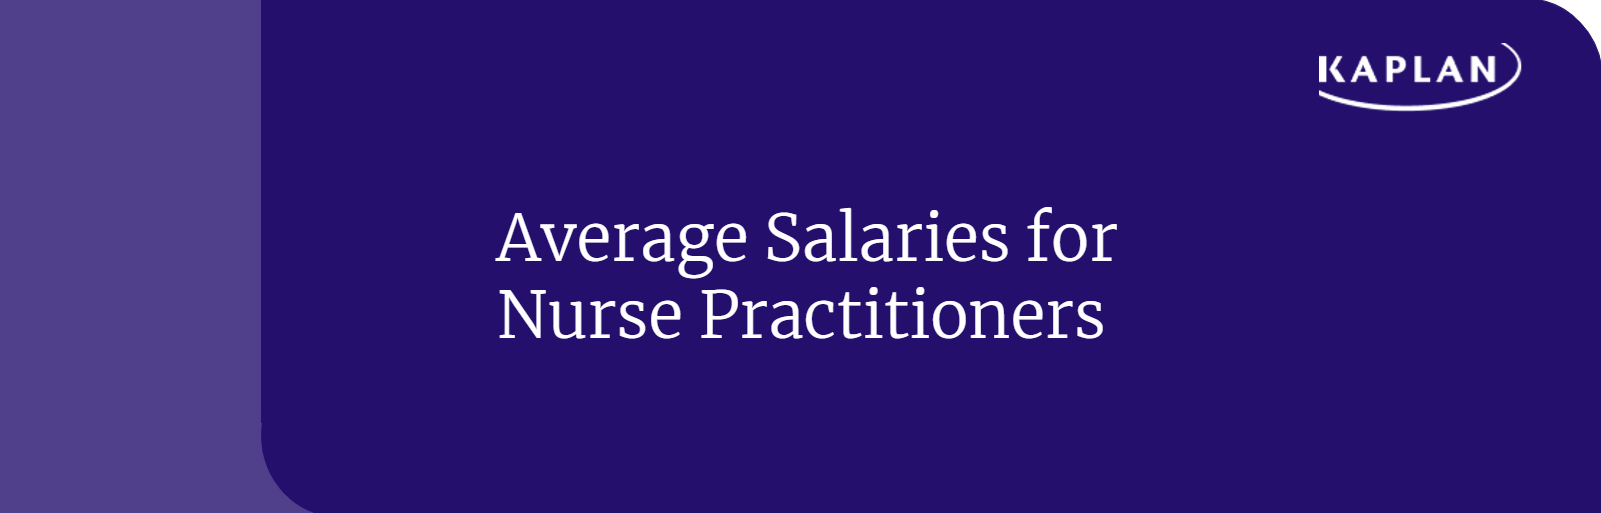 Average Nurse Practitioner Salaries by Specialty